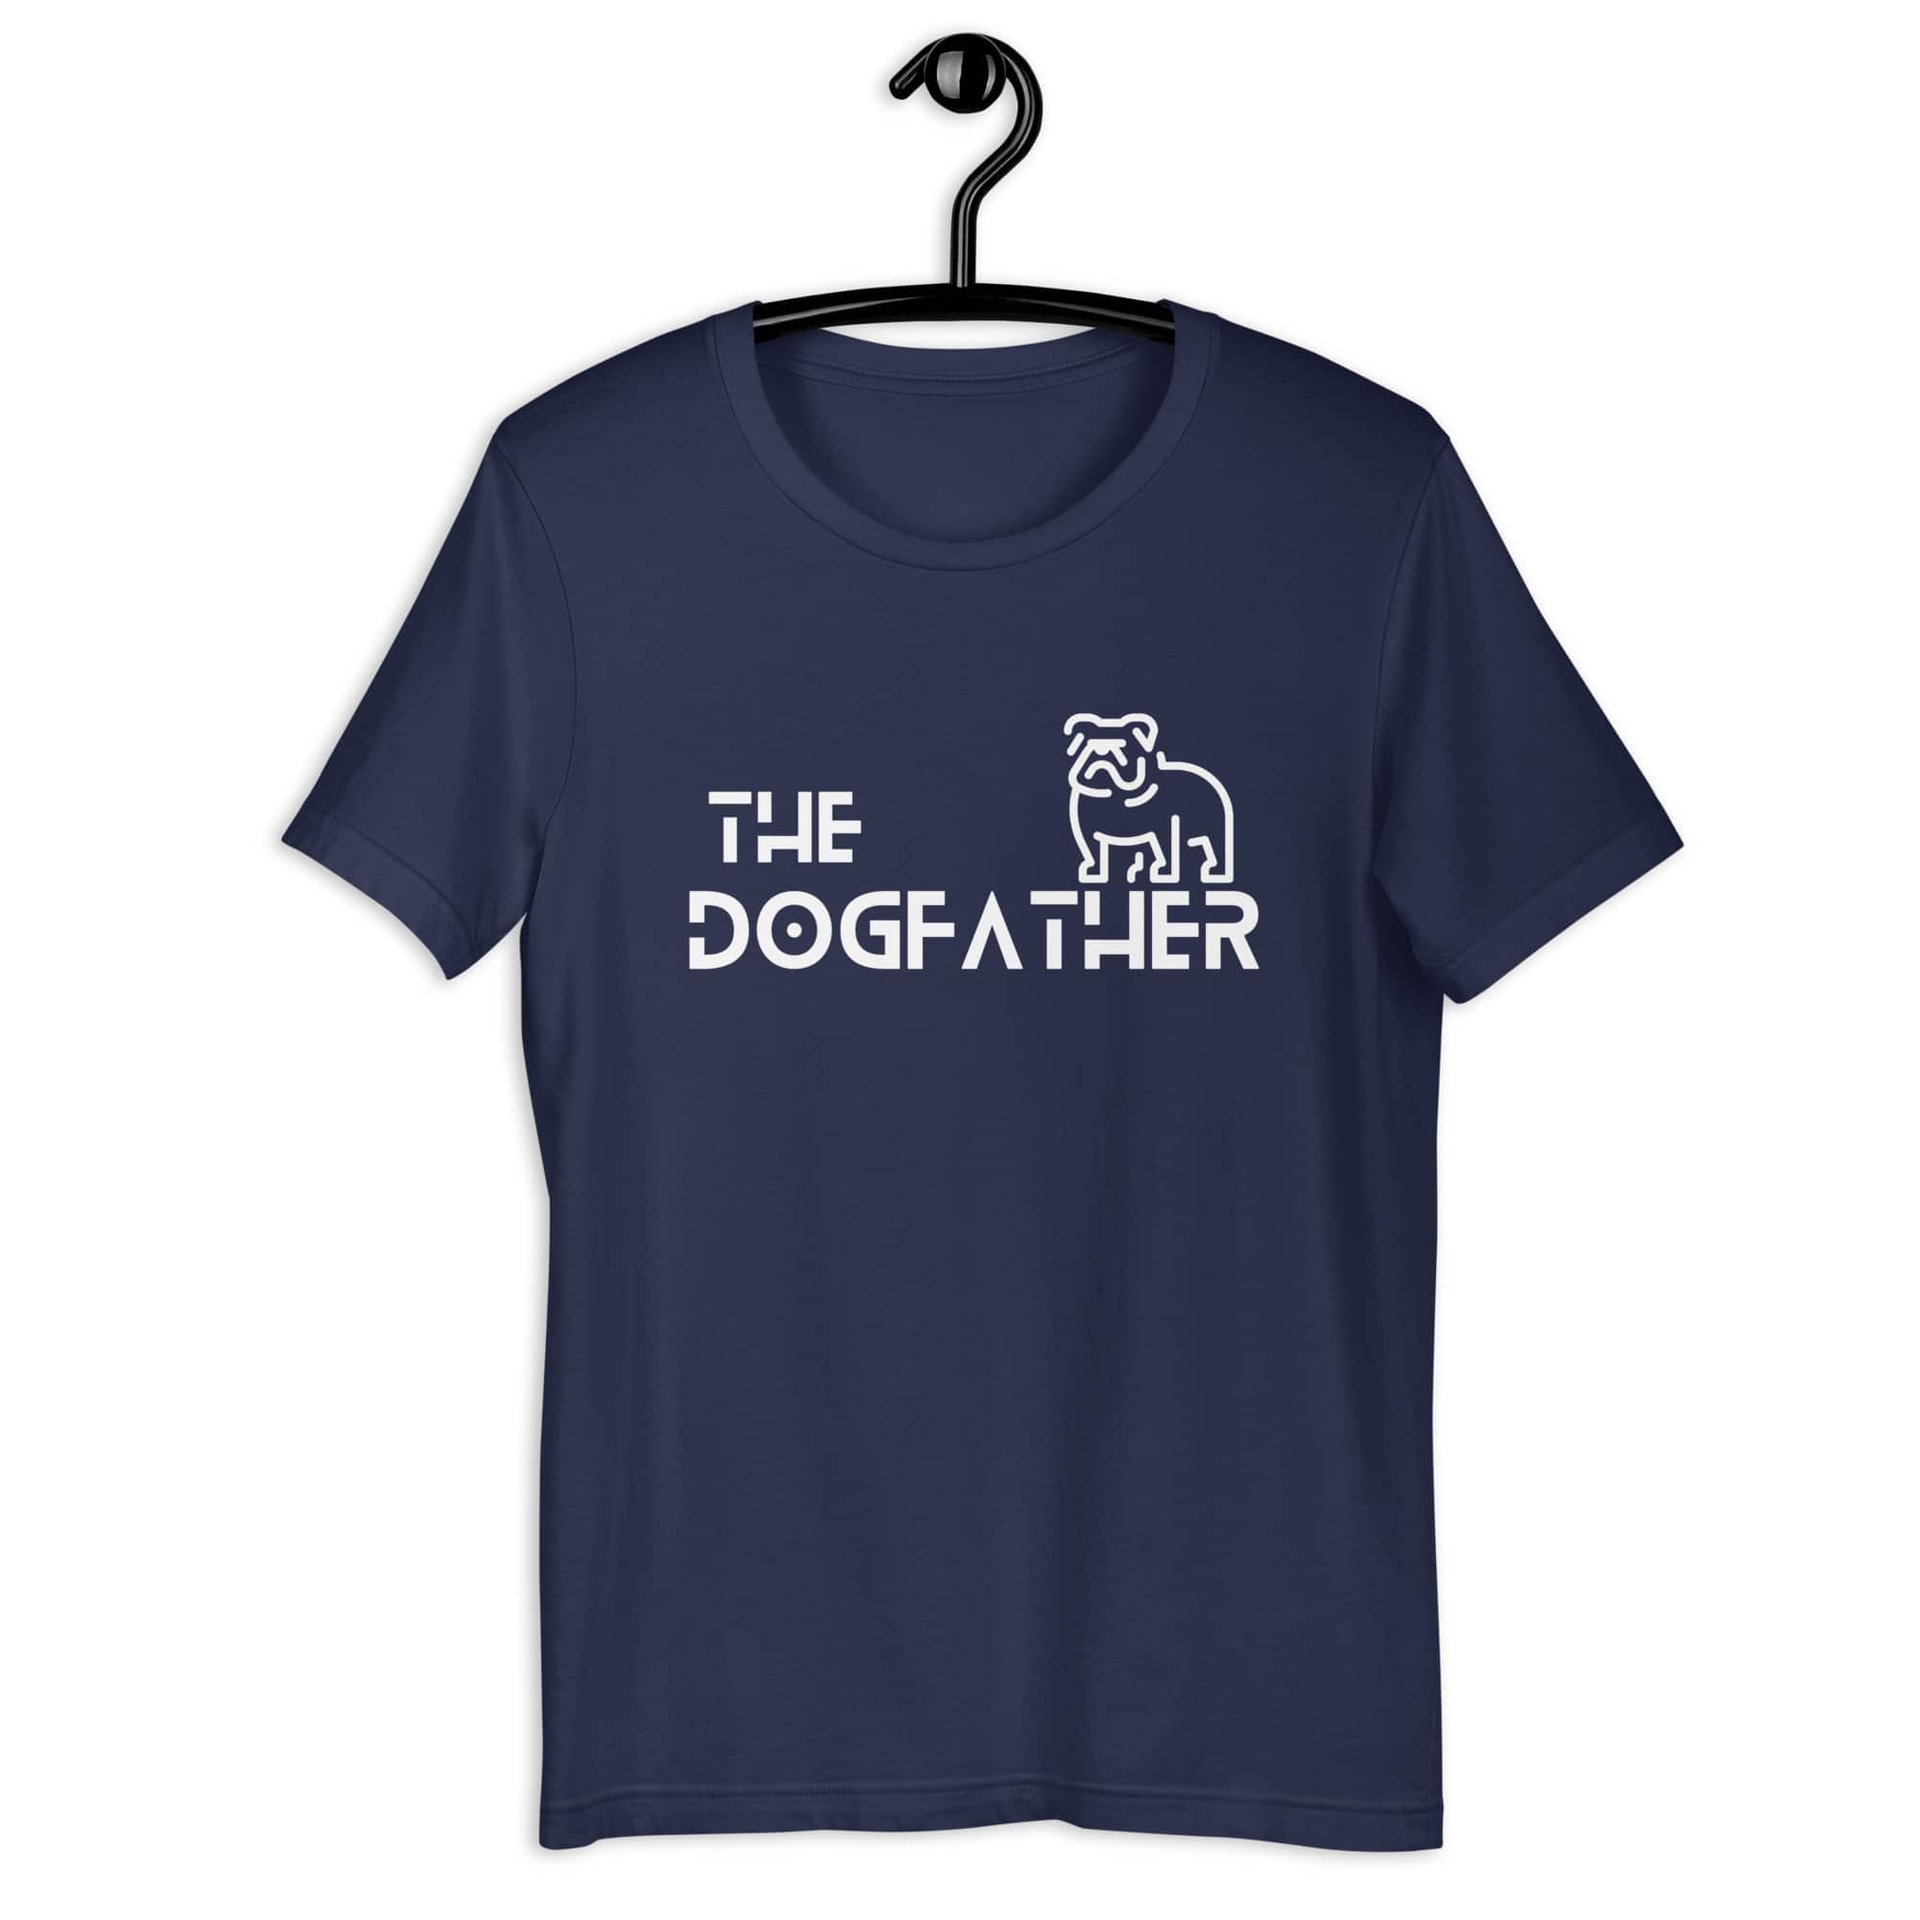 The Dogfather Bulldog Unisex T-Shirt. Navy